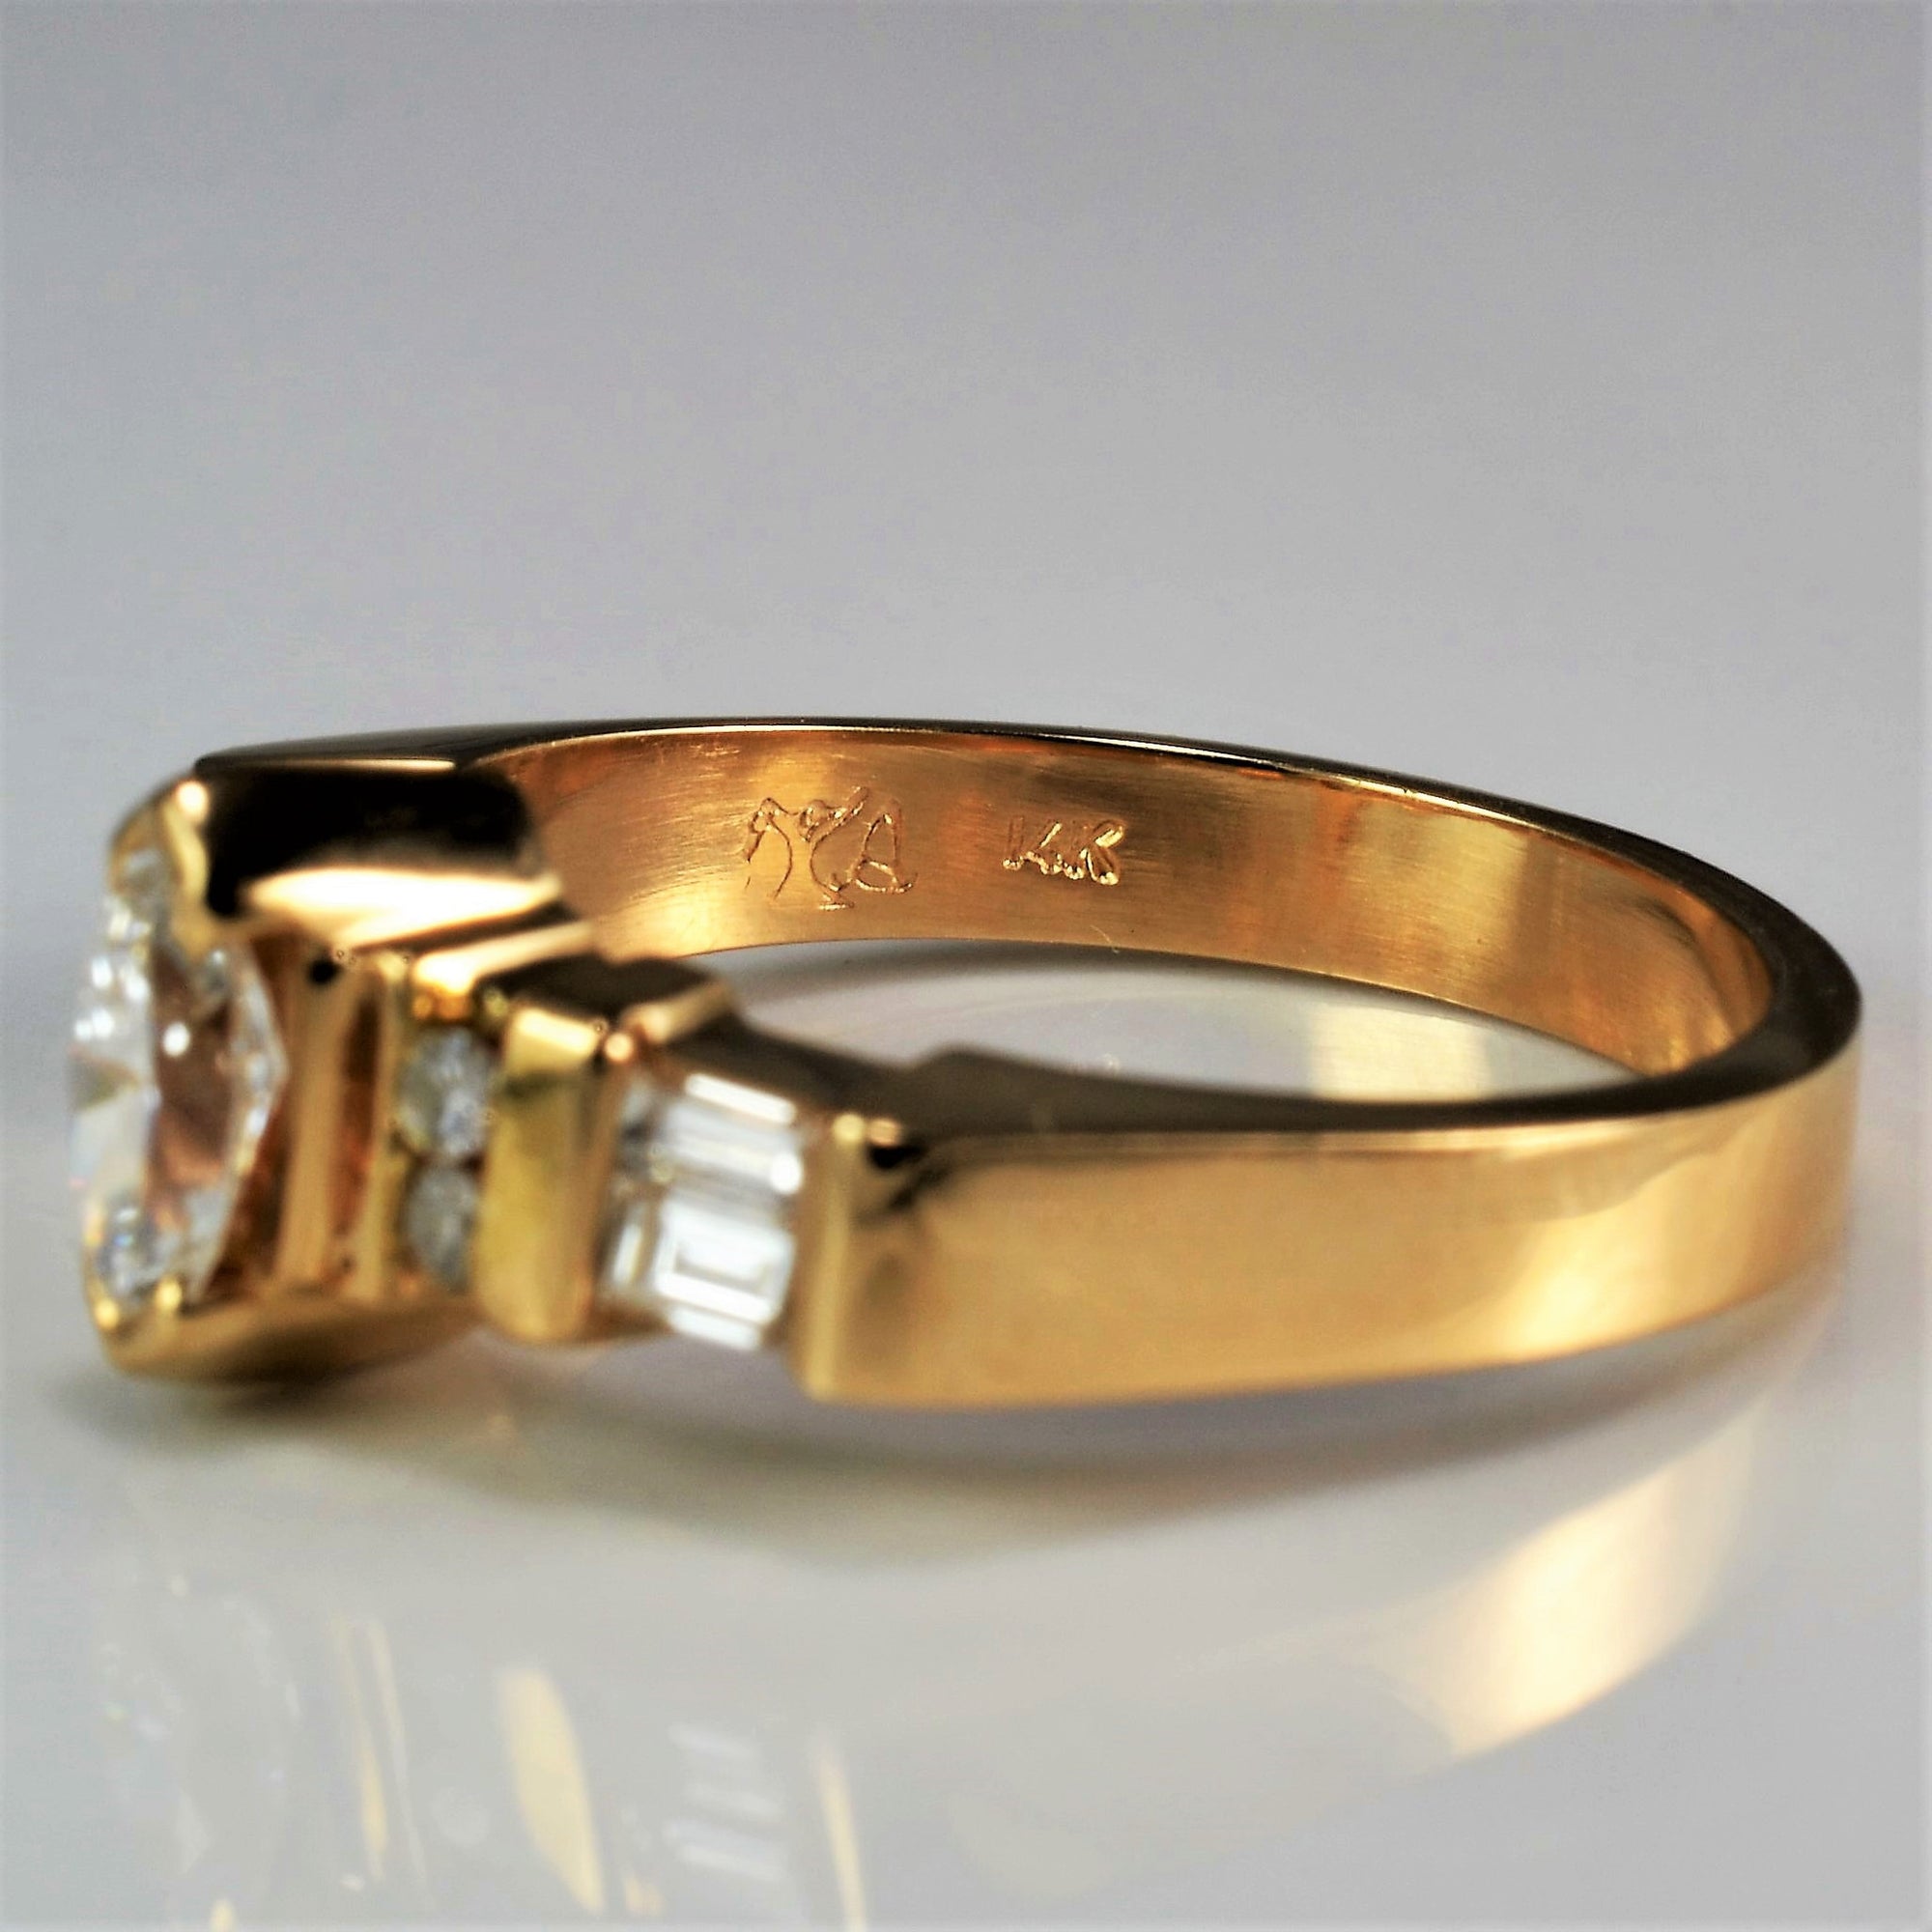 Marquise Cut Diamond Engagement Ring | 0.45ctw | SZ 6.25 |